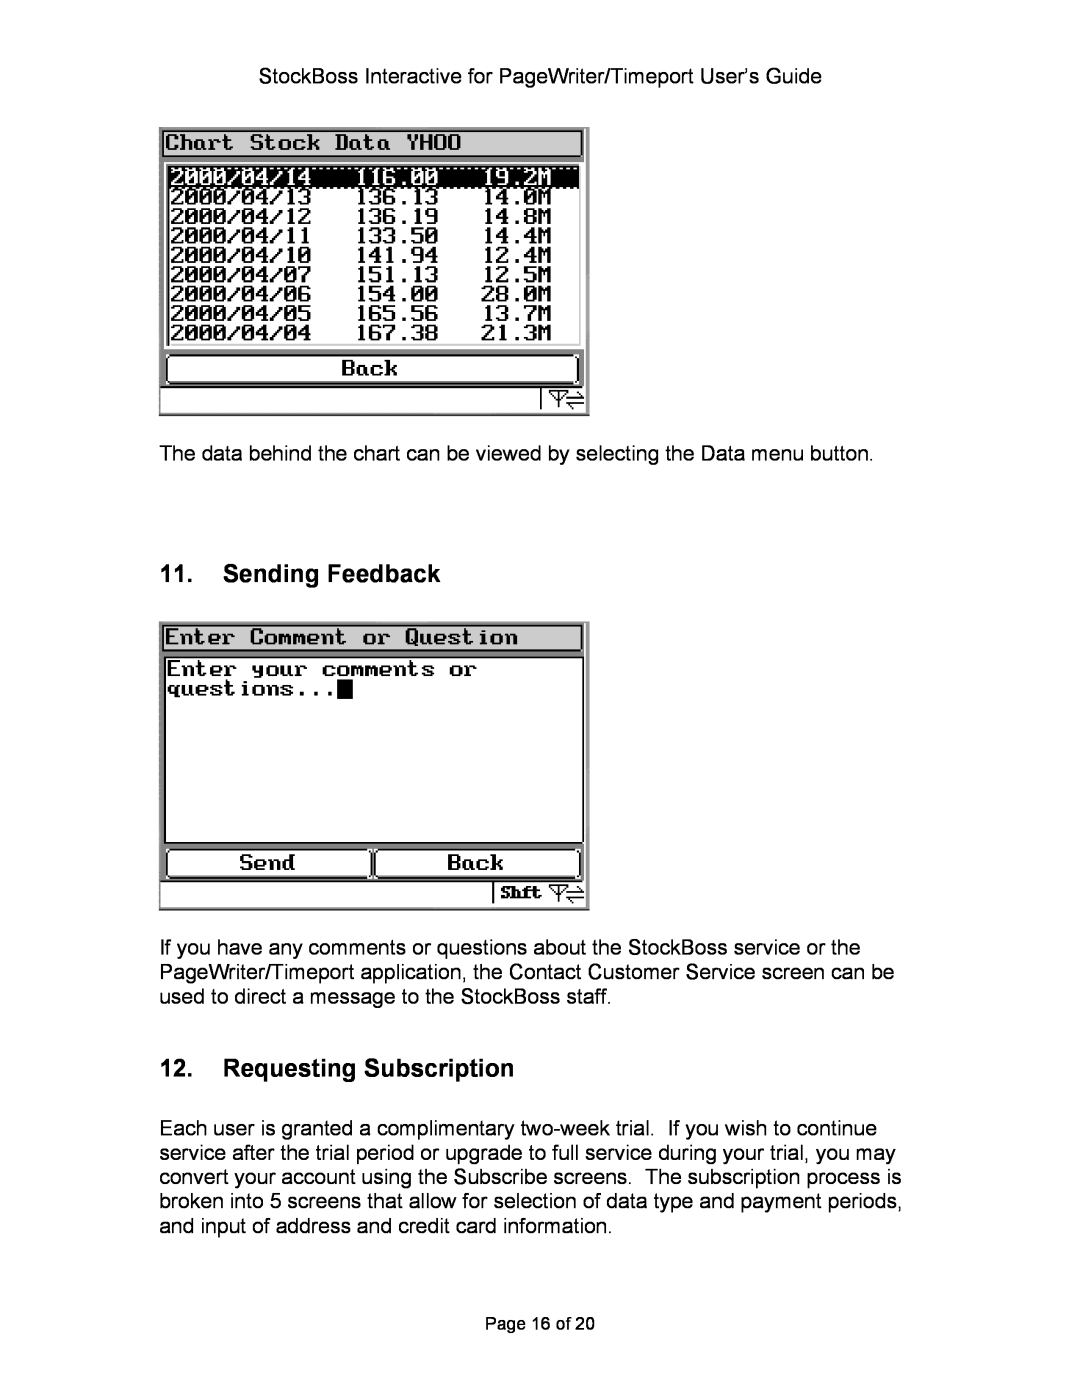 Motorola P930 Series manual Sending Feedback, Requesting Subscription, Page 16 of 